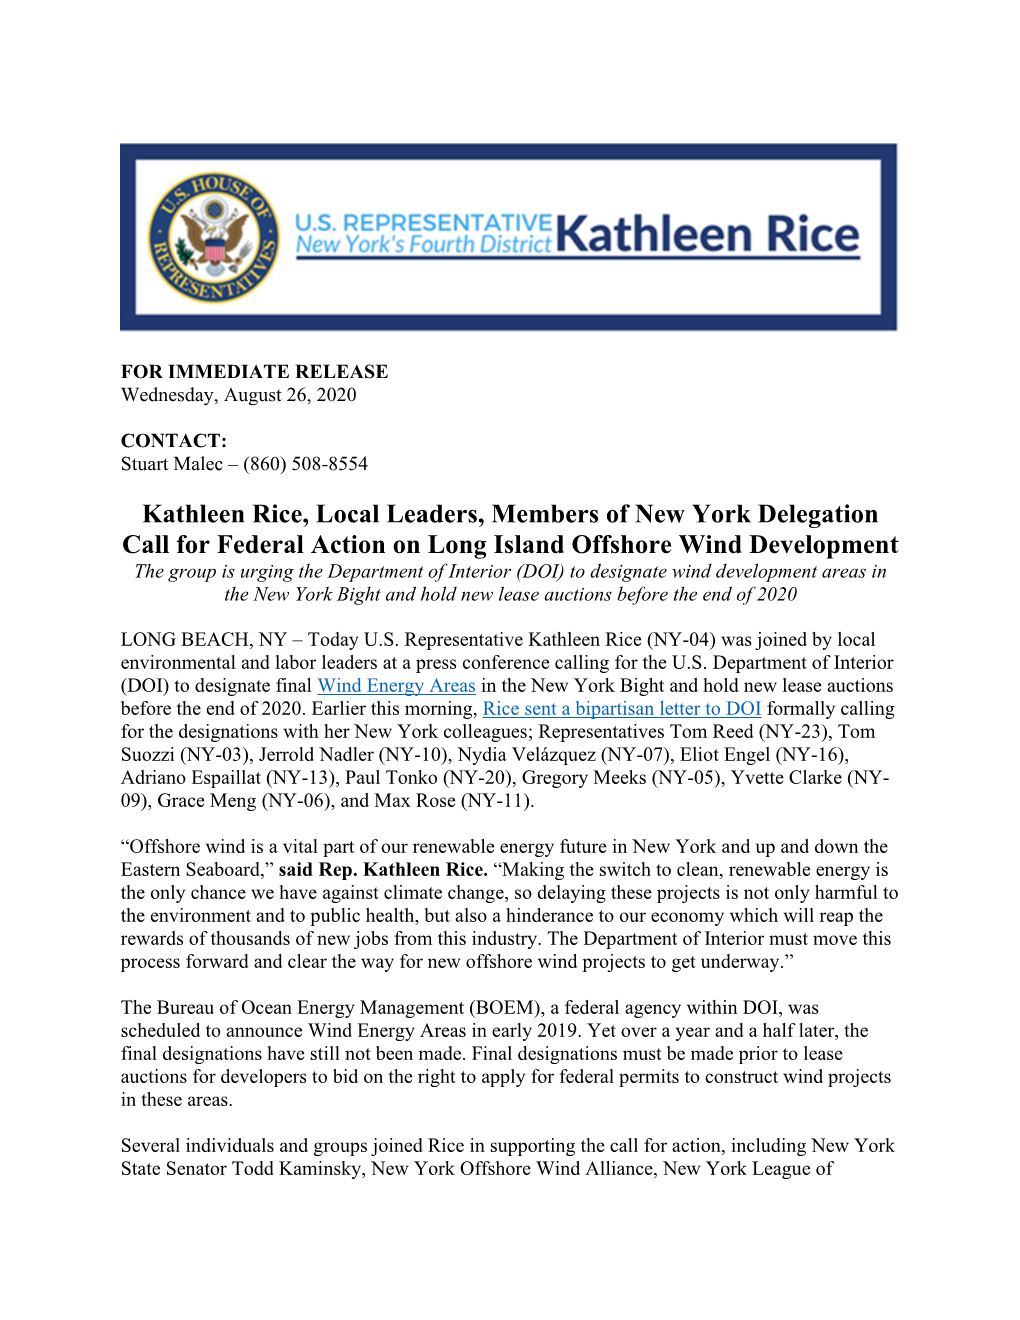 Kathleen Rice, Local Leaders, Members of New York Delegation